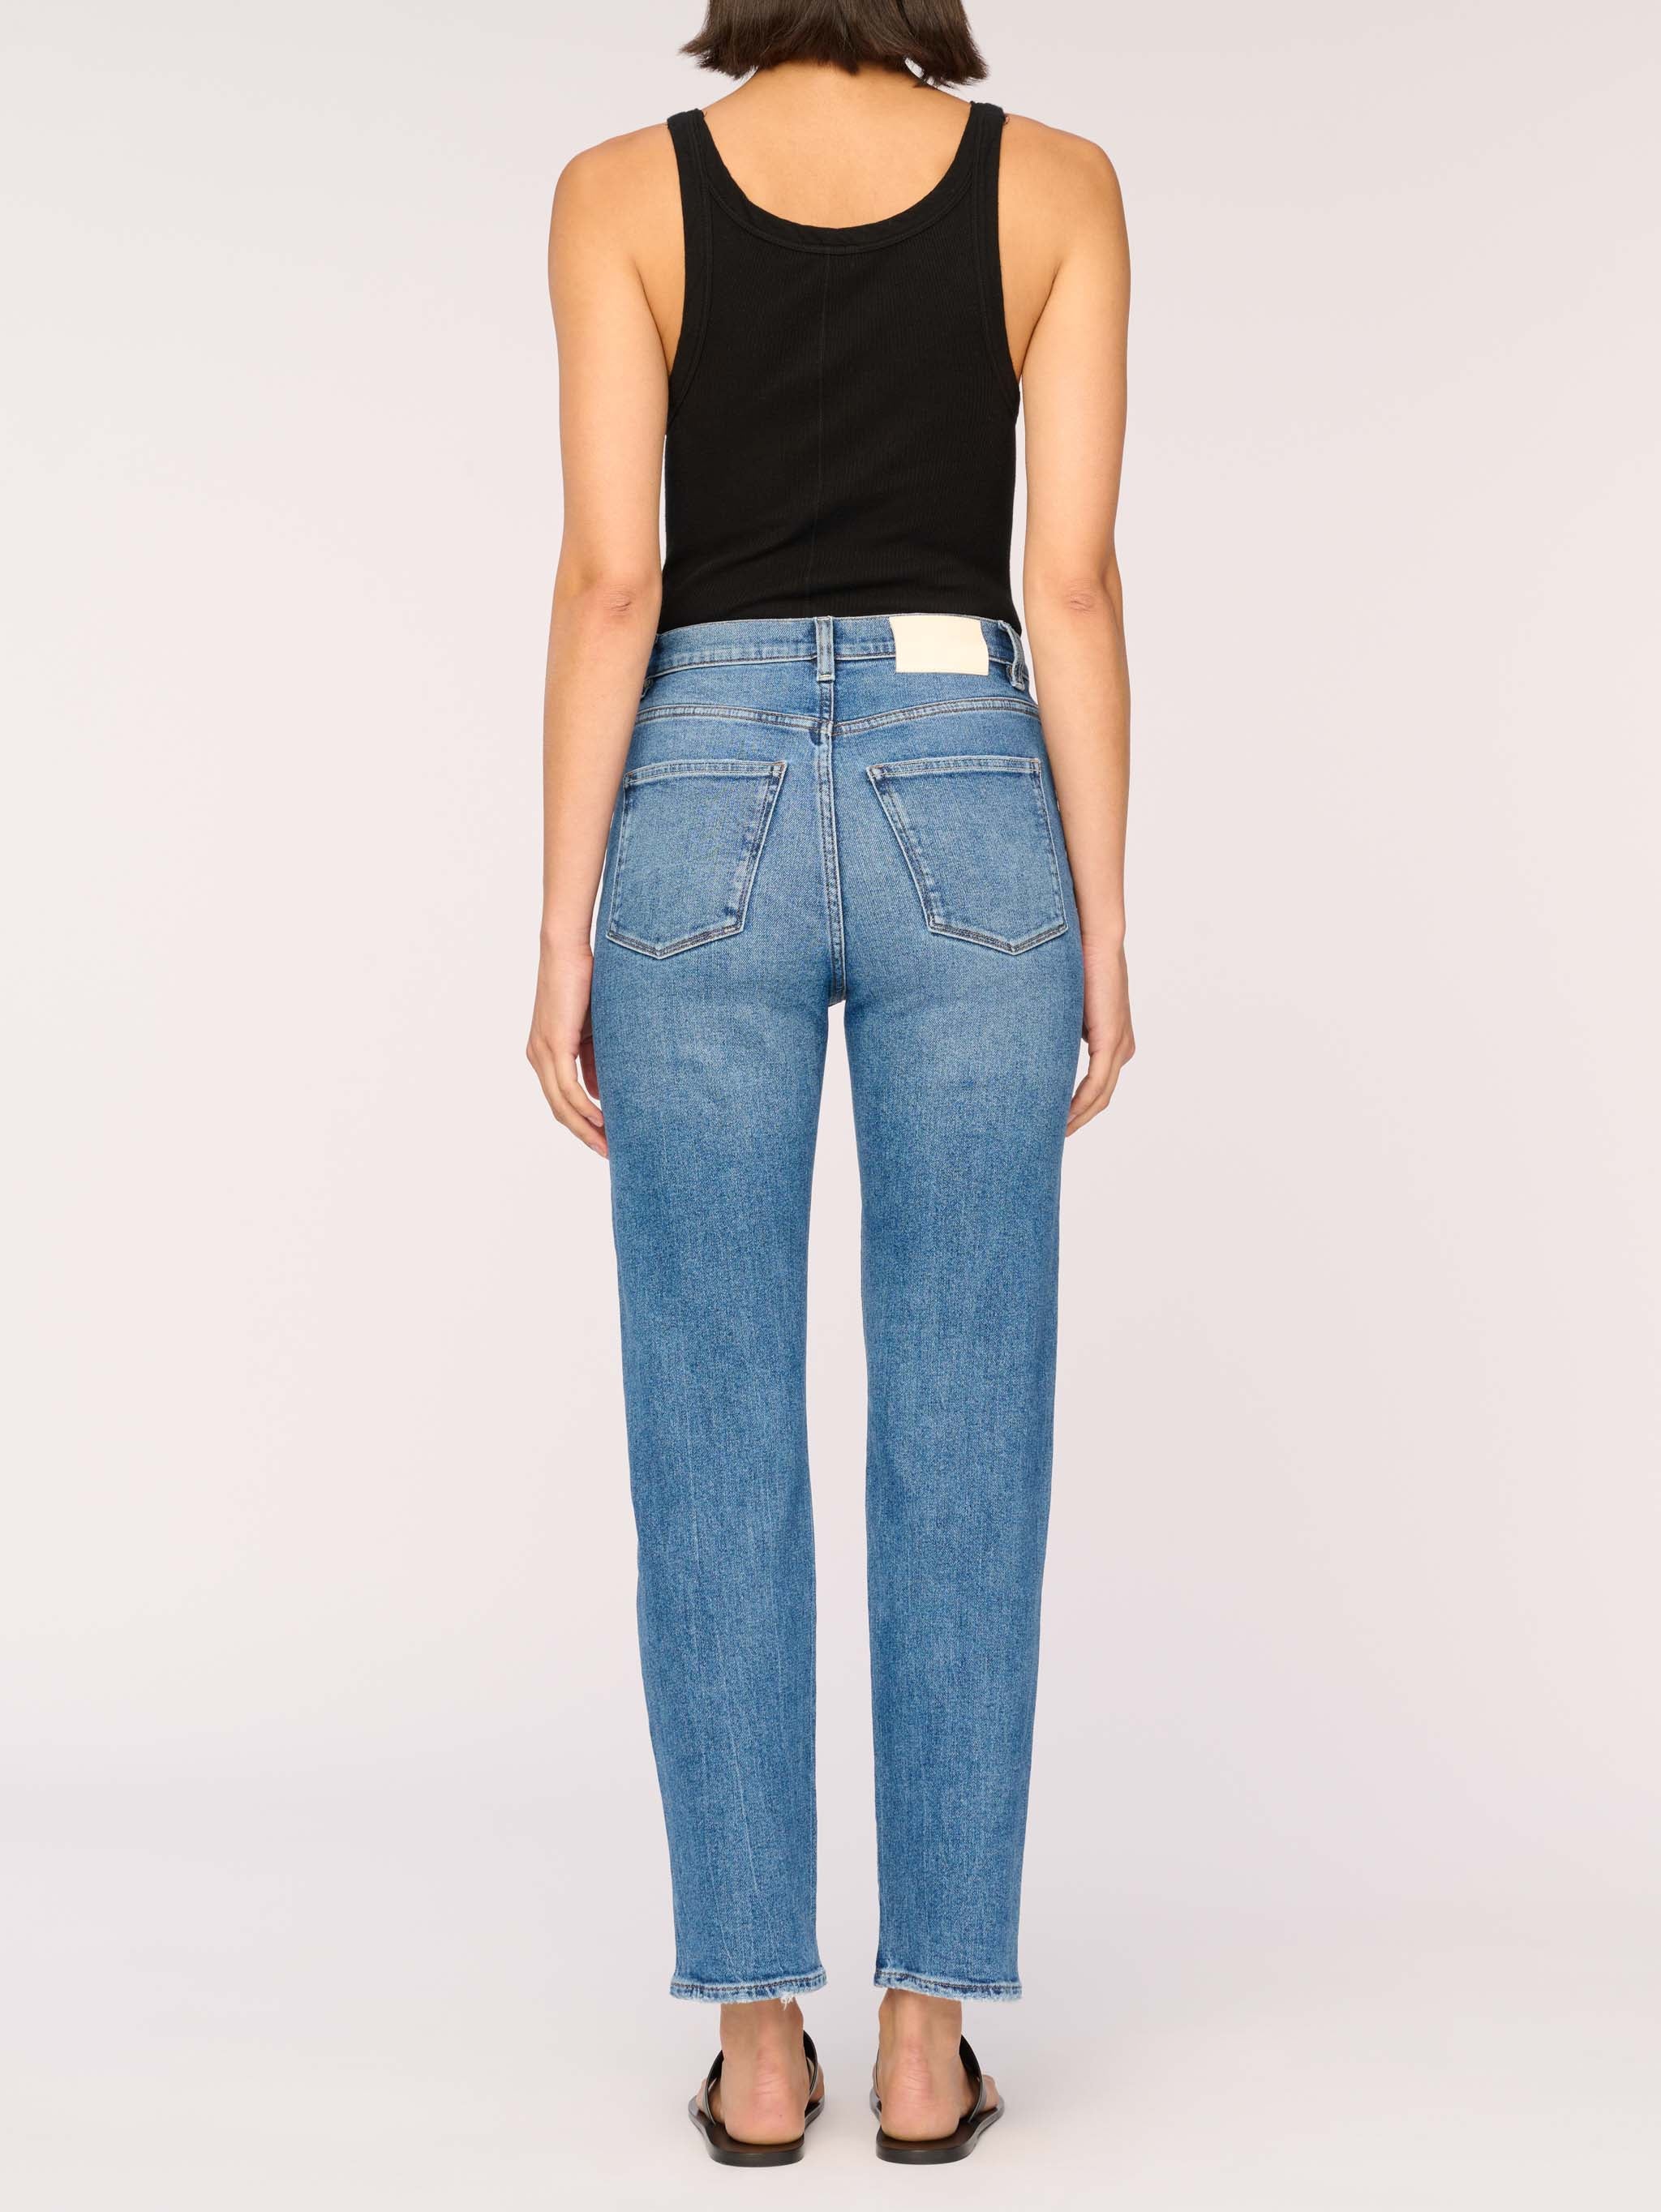 Cigarette high waist jeans Ava - DNM G-635 - Outlet Jeans - Reiko Jeans